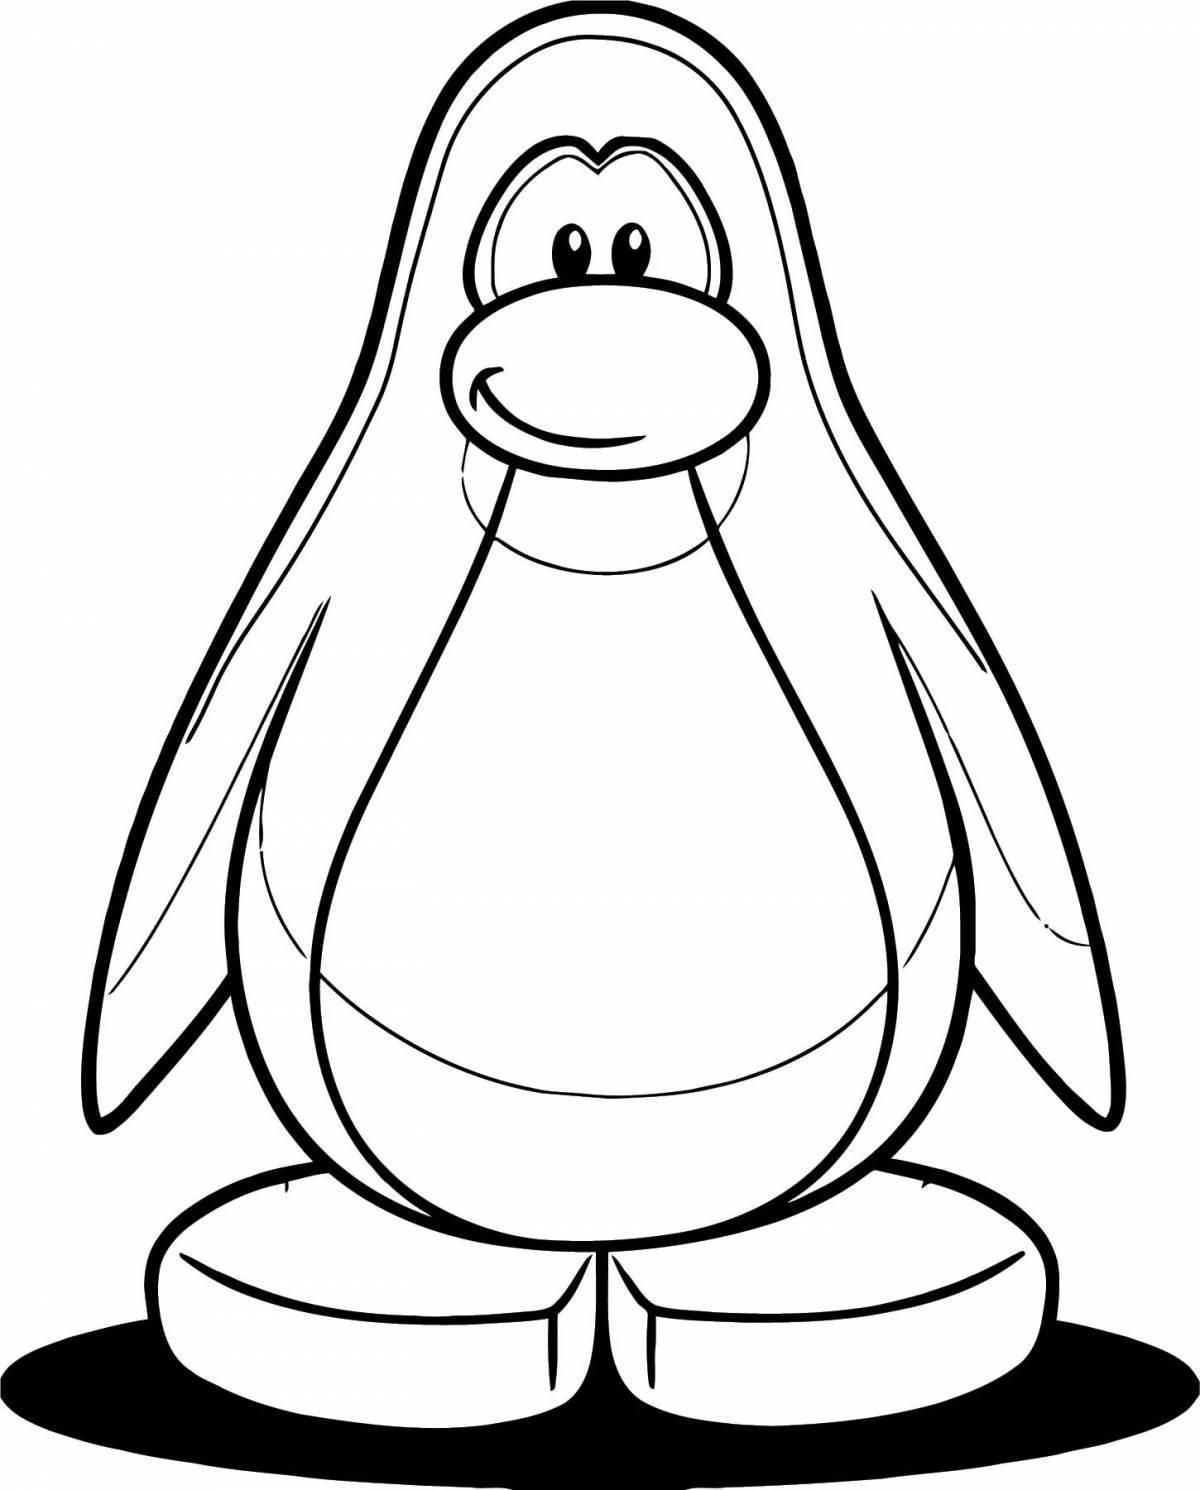 Luxury penguin coloring book